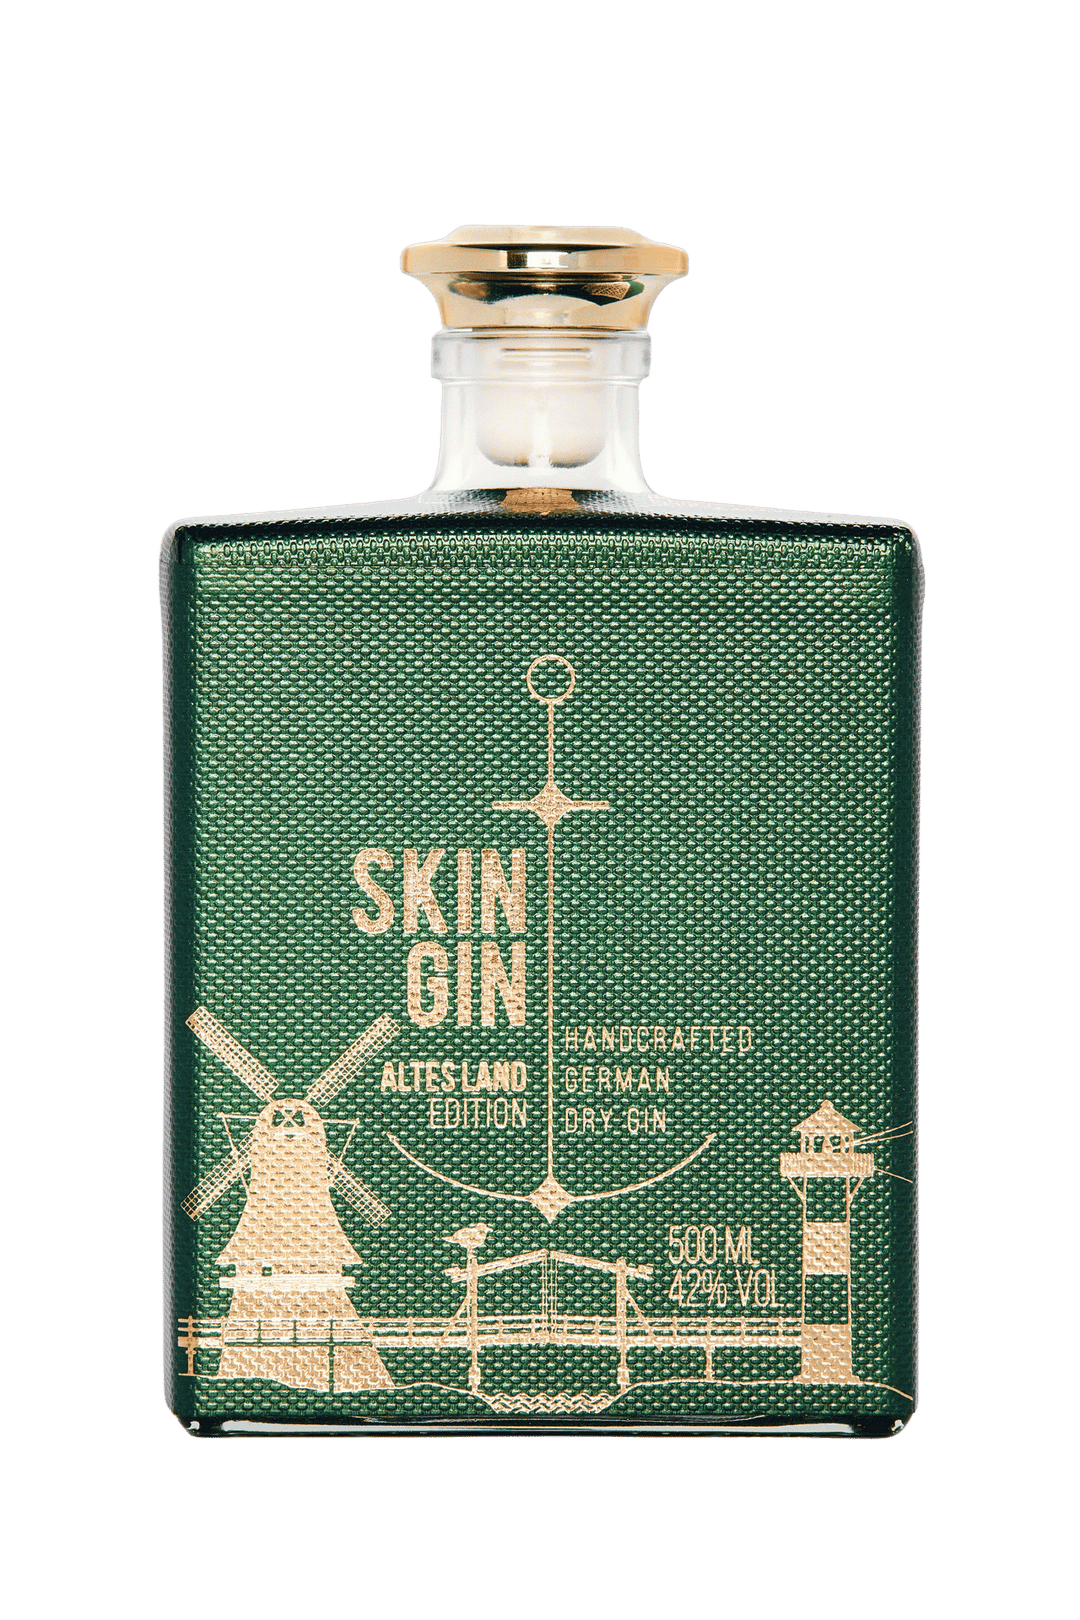 Skin Gin Altes Land Edition Box